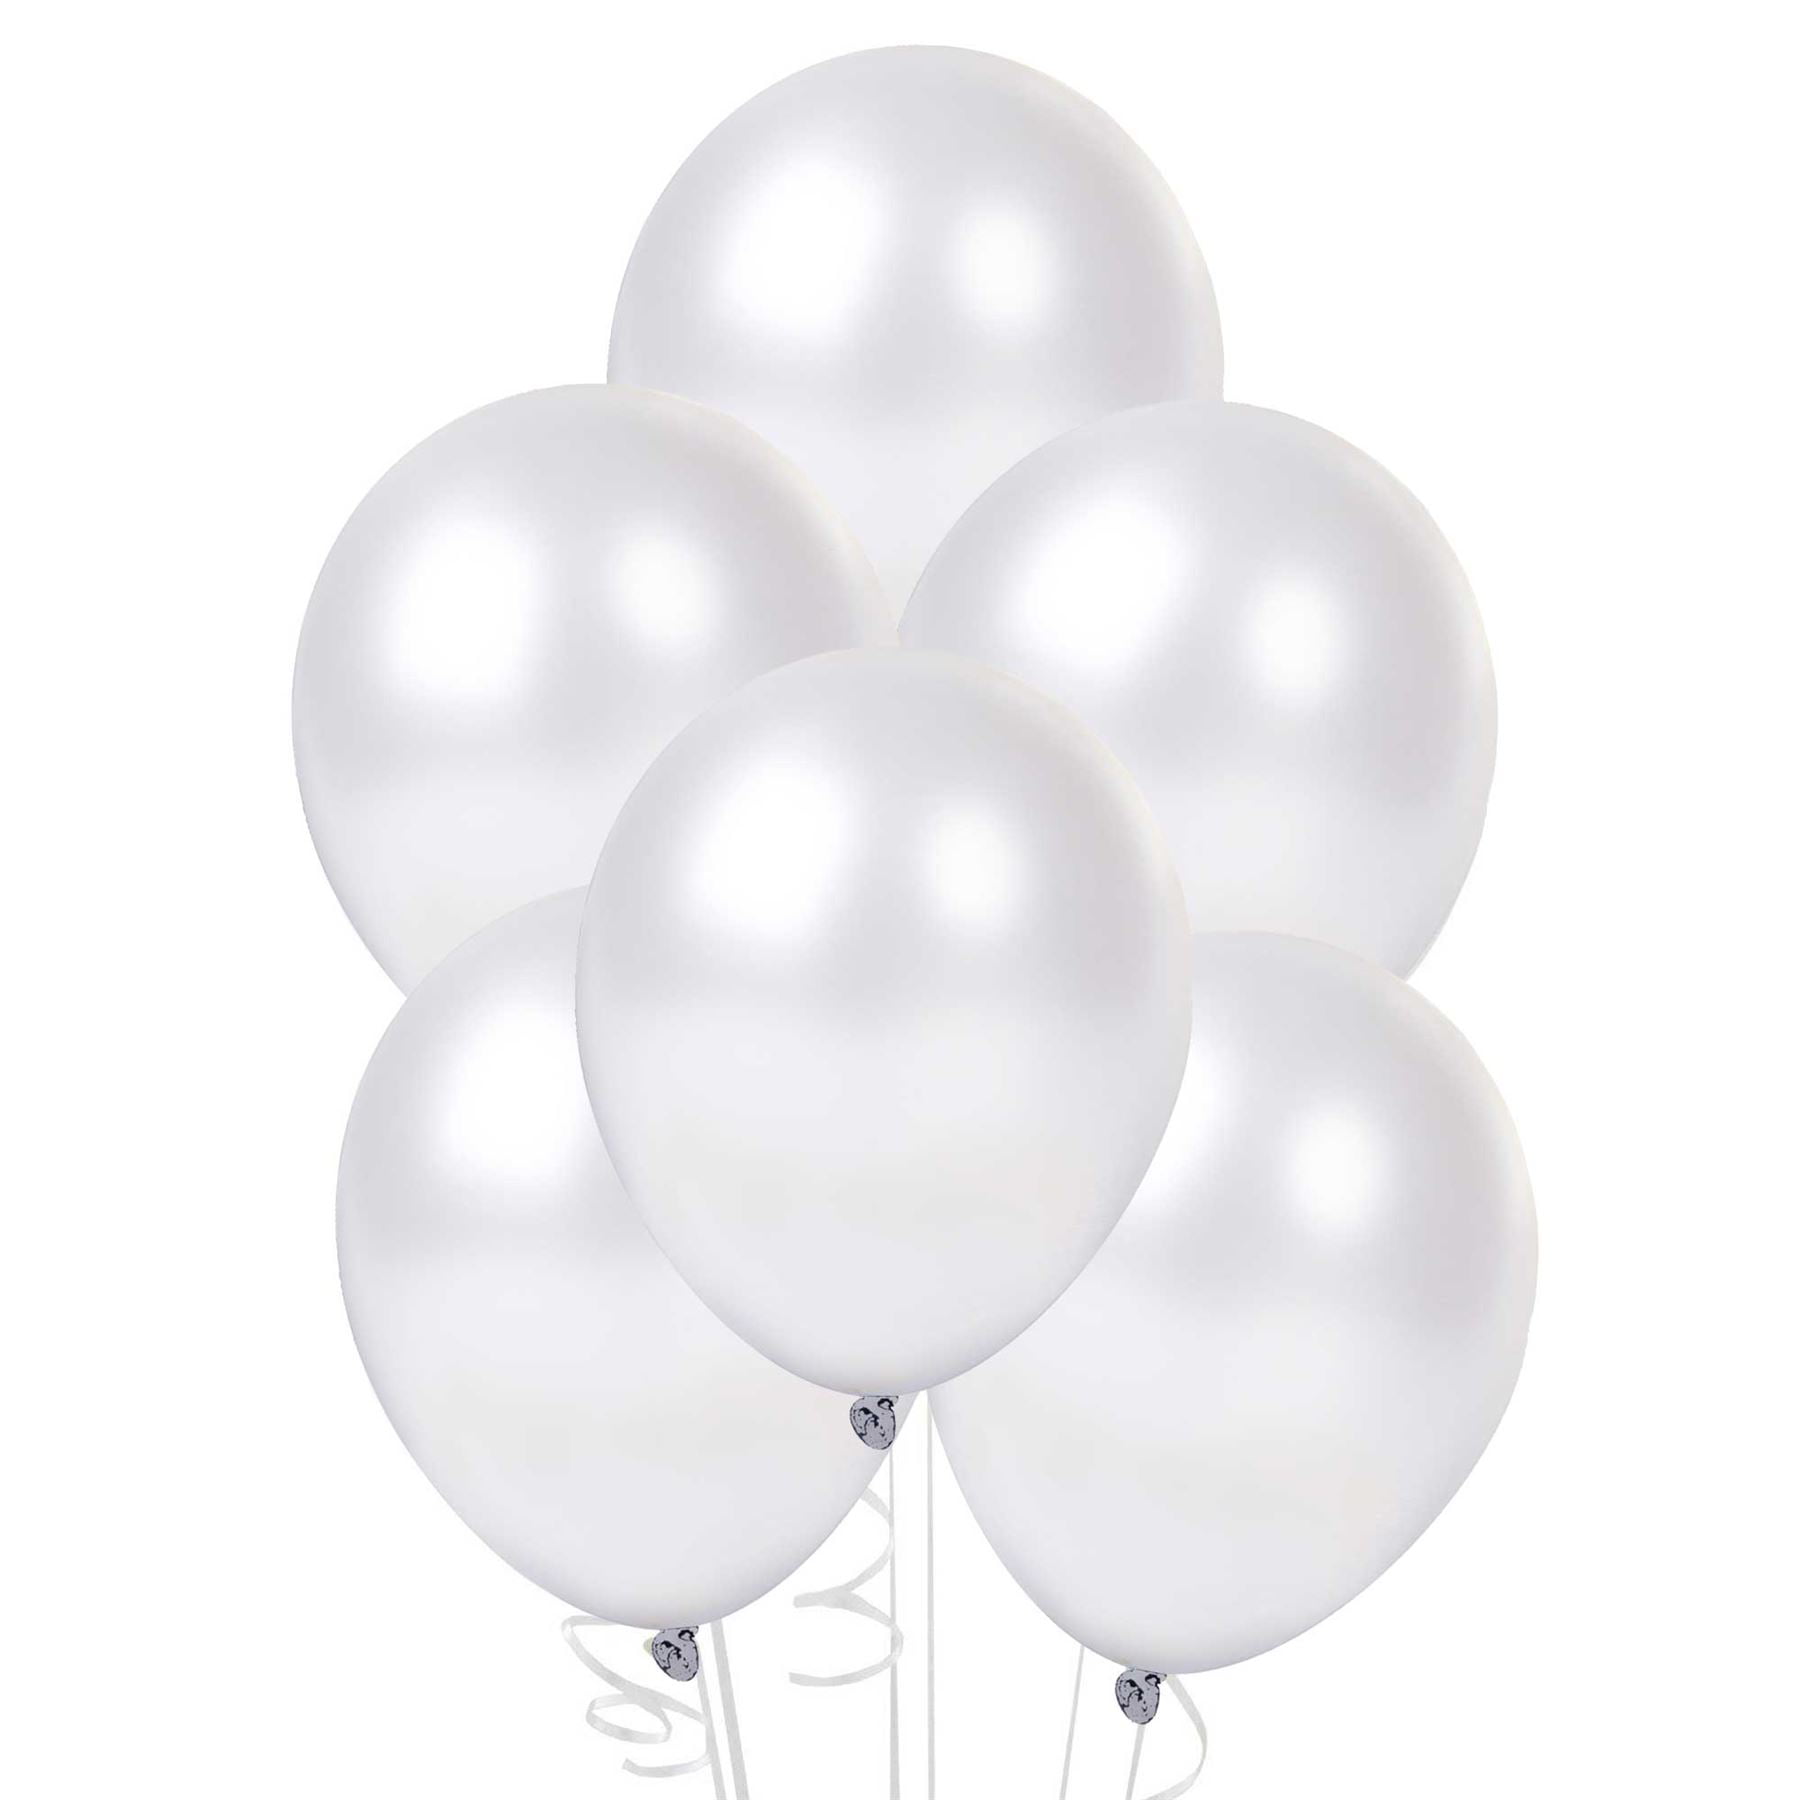 50 new Latex metallic pearl BALOON helium BALLOON Quality Party Birthday Wedding 